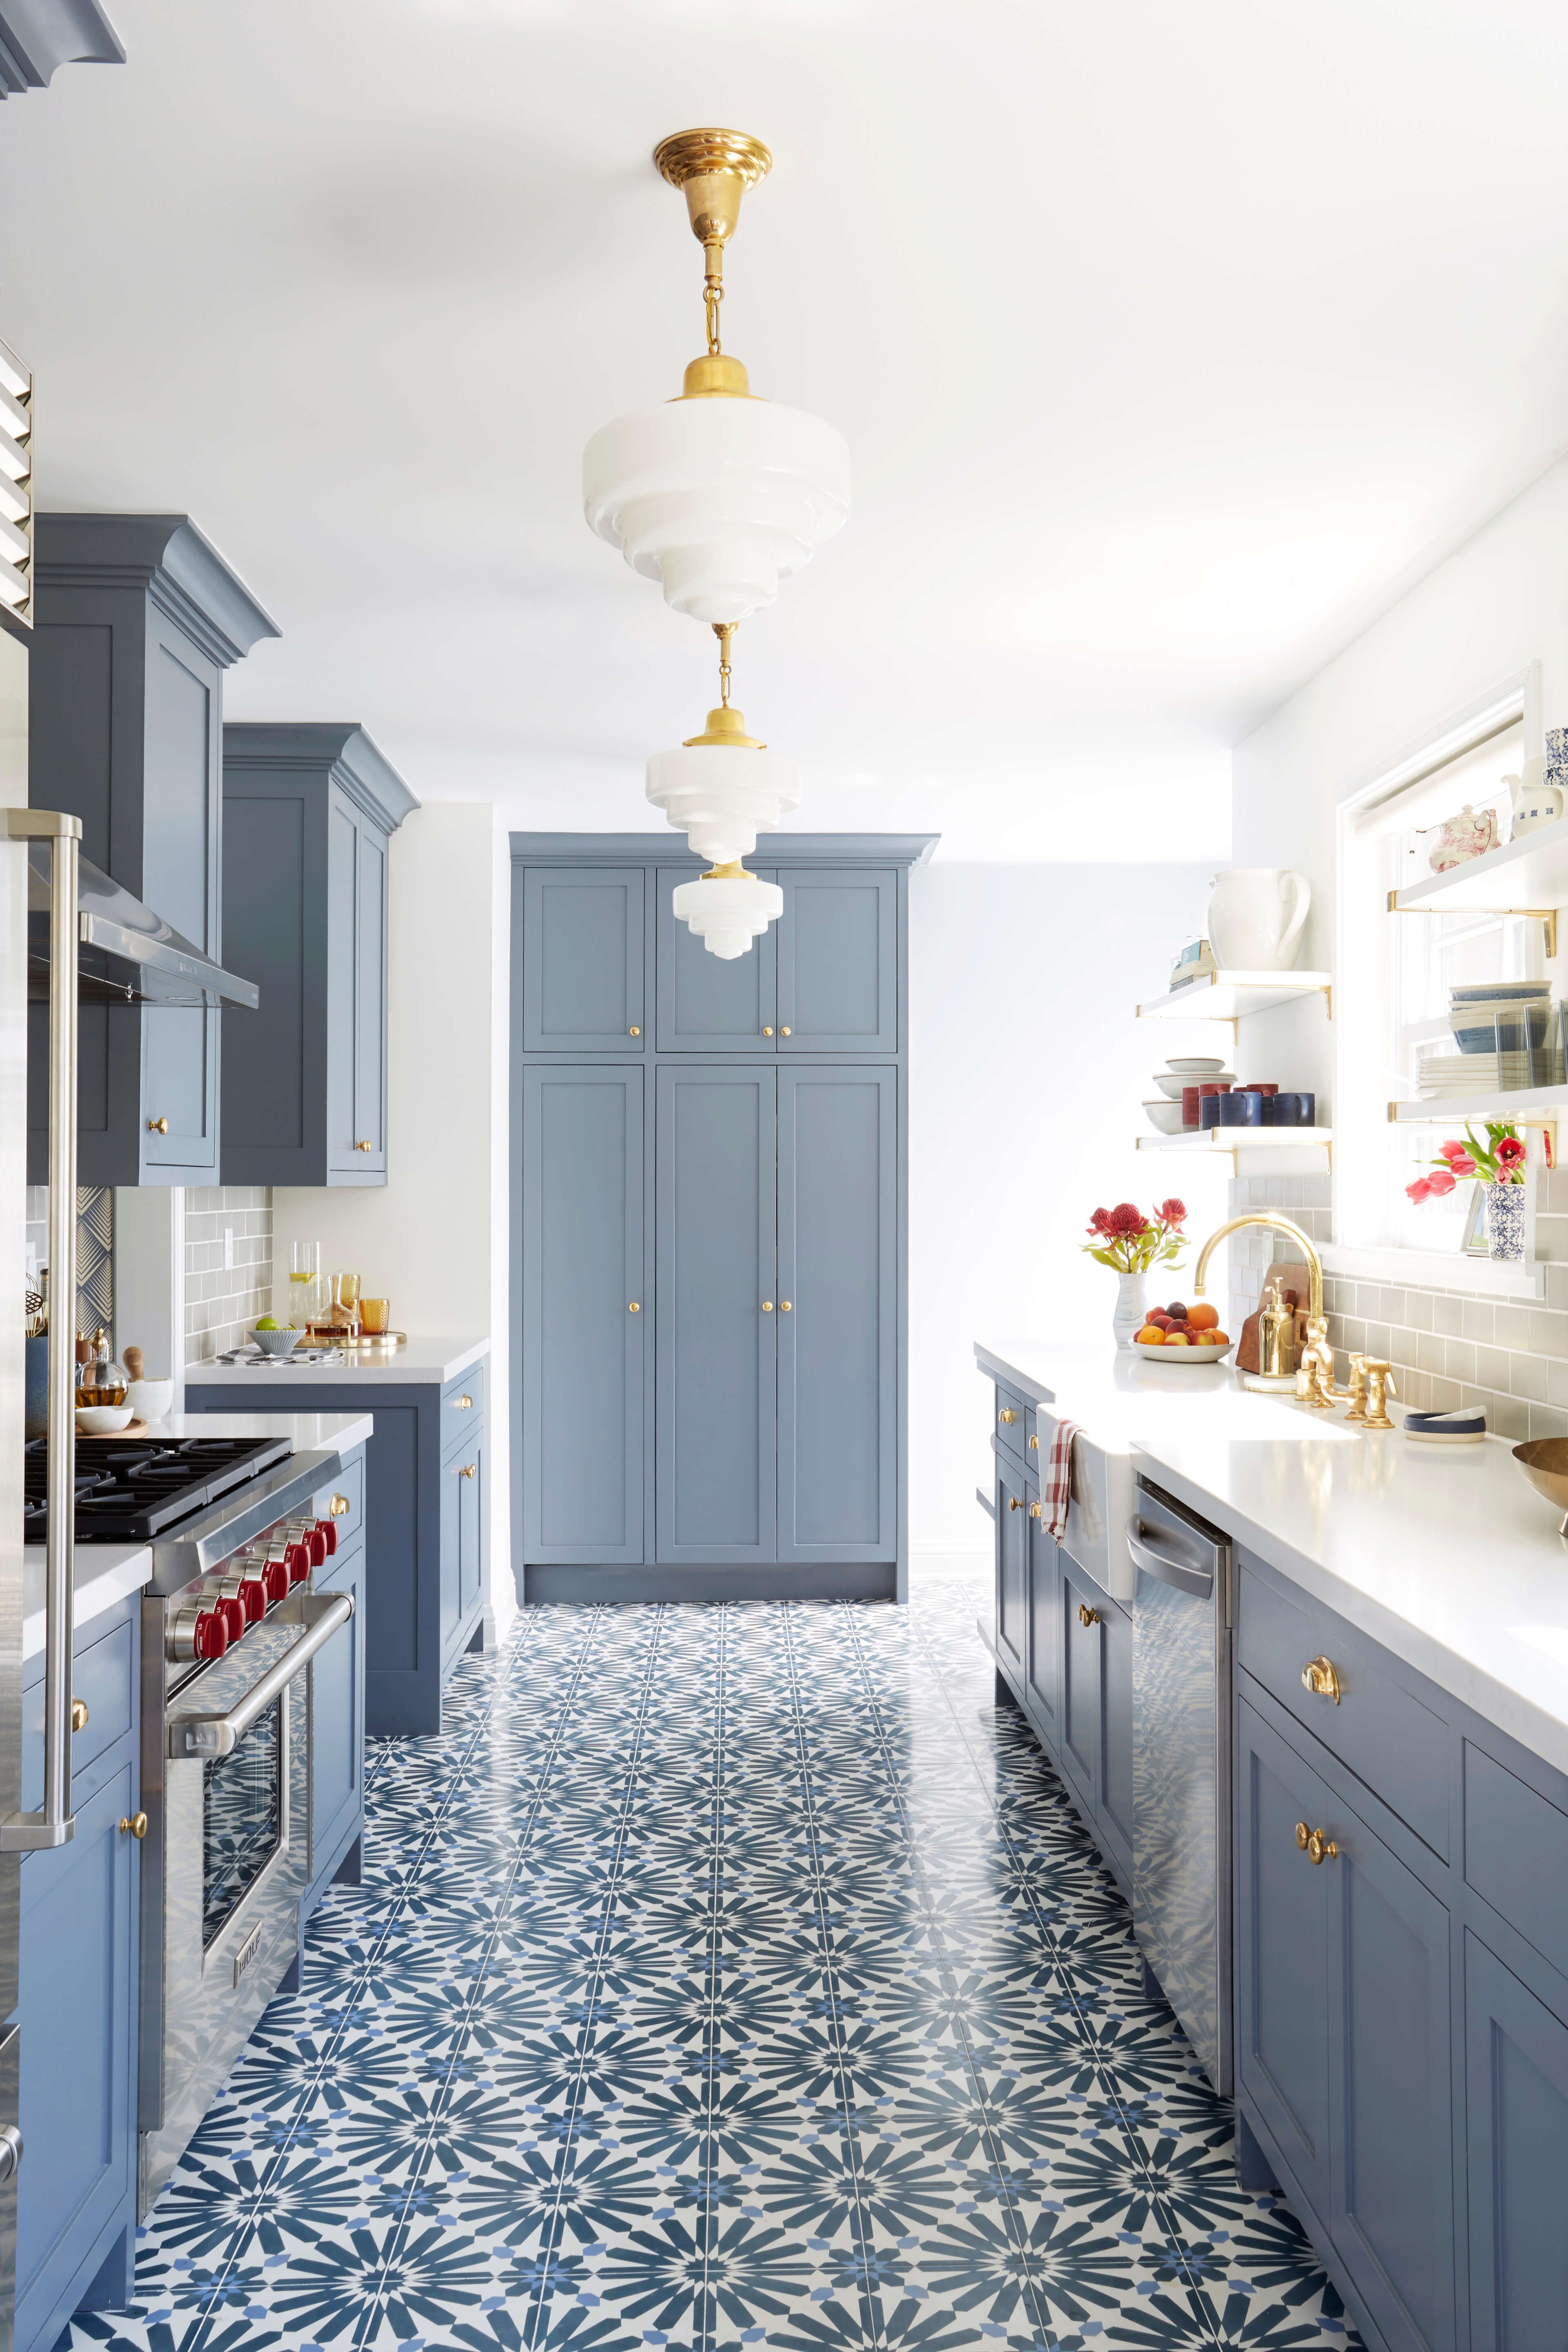 bold blue kitchen cabinets